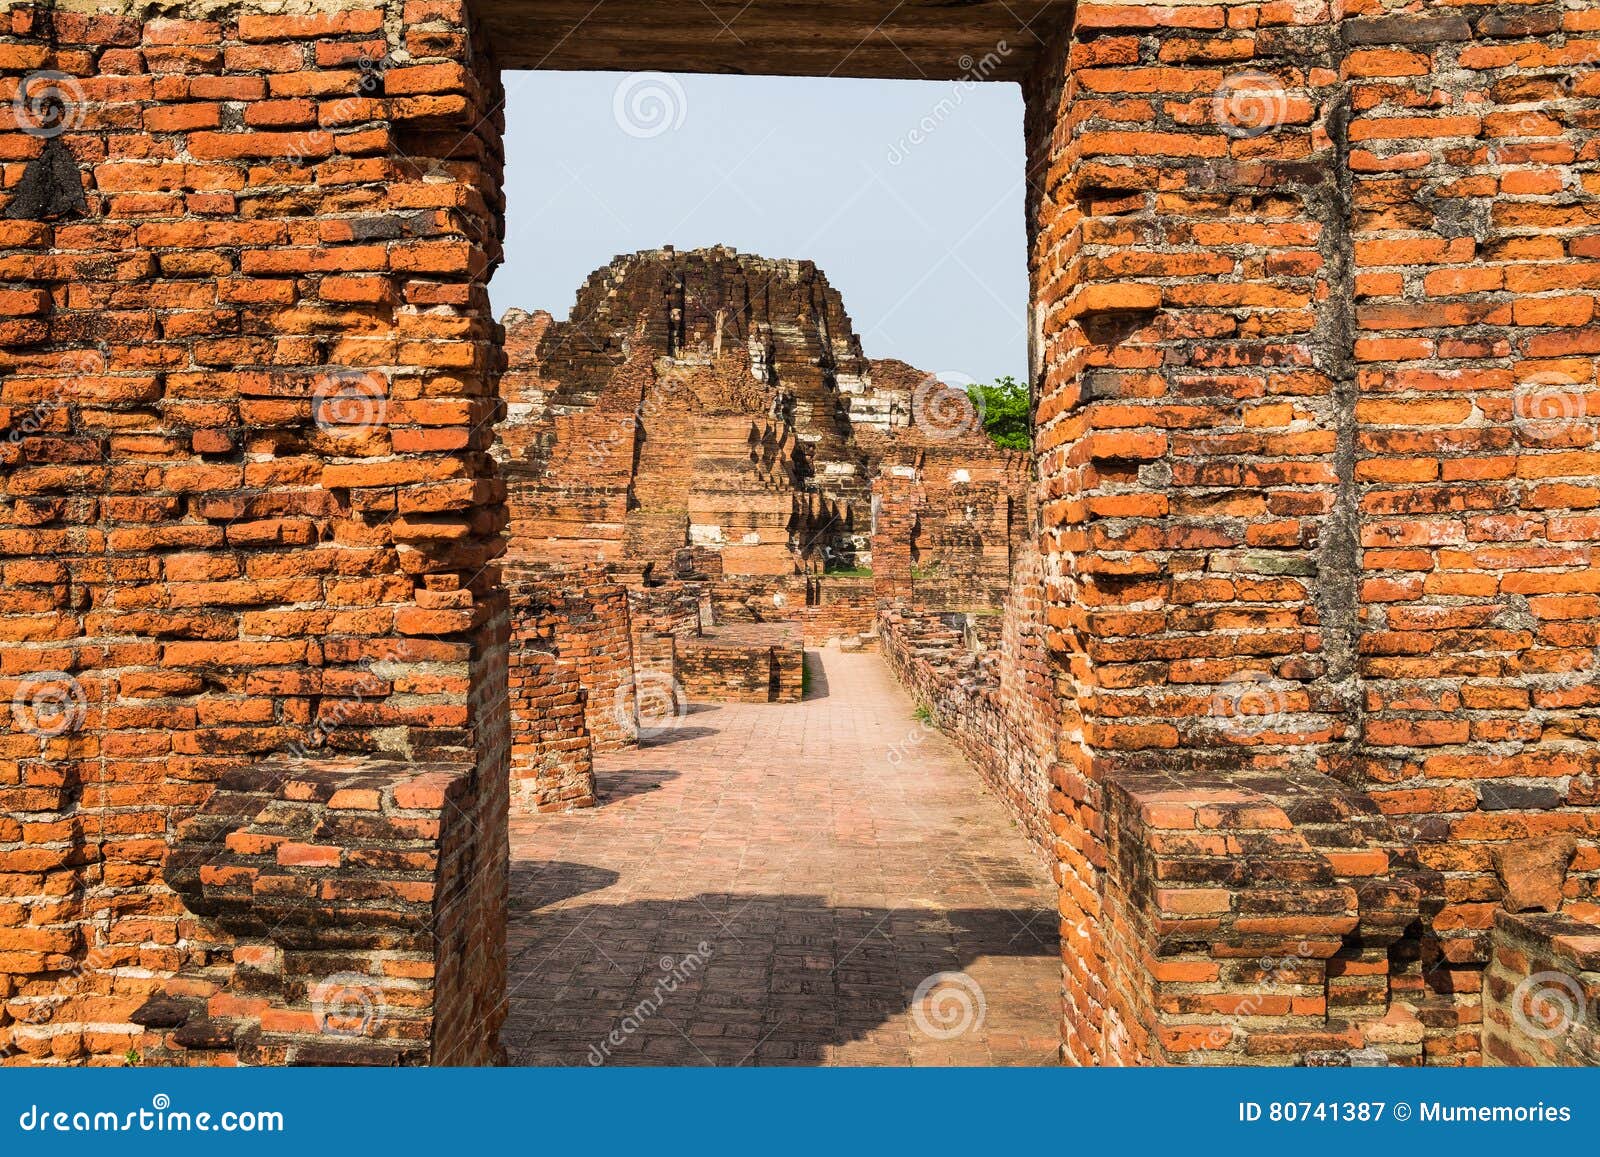 temple brick pagoda ancient ruins invaluable